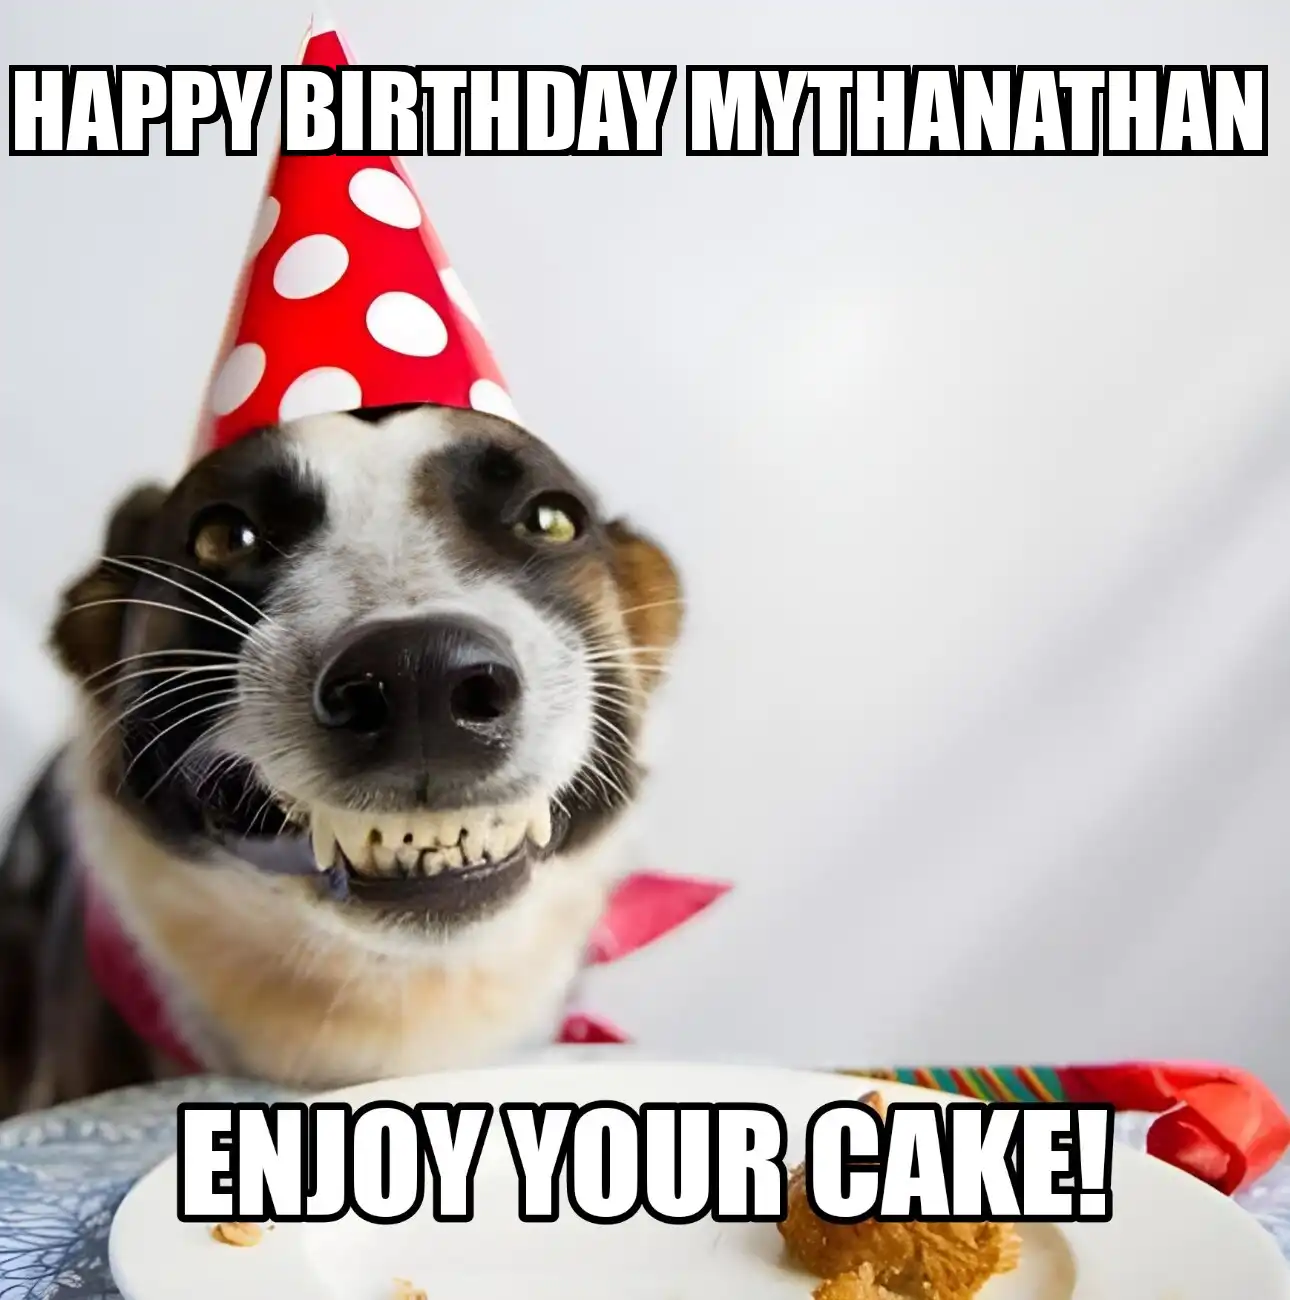 Happy Birthday Mythanathan Enjoy Your Cake Dog Meme